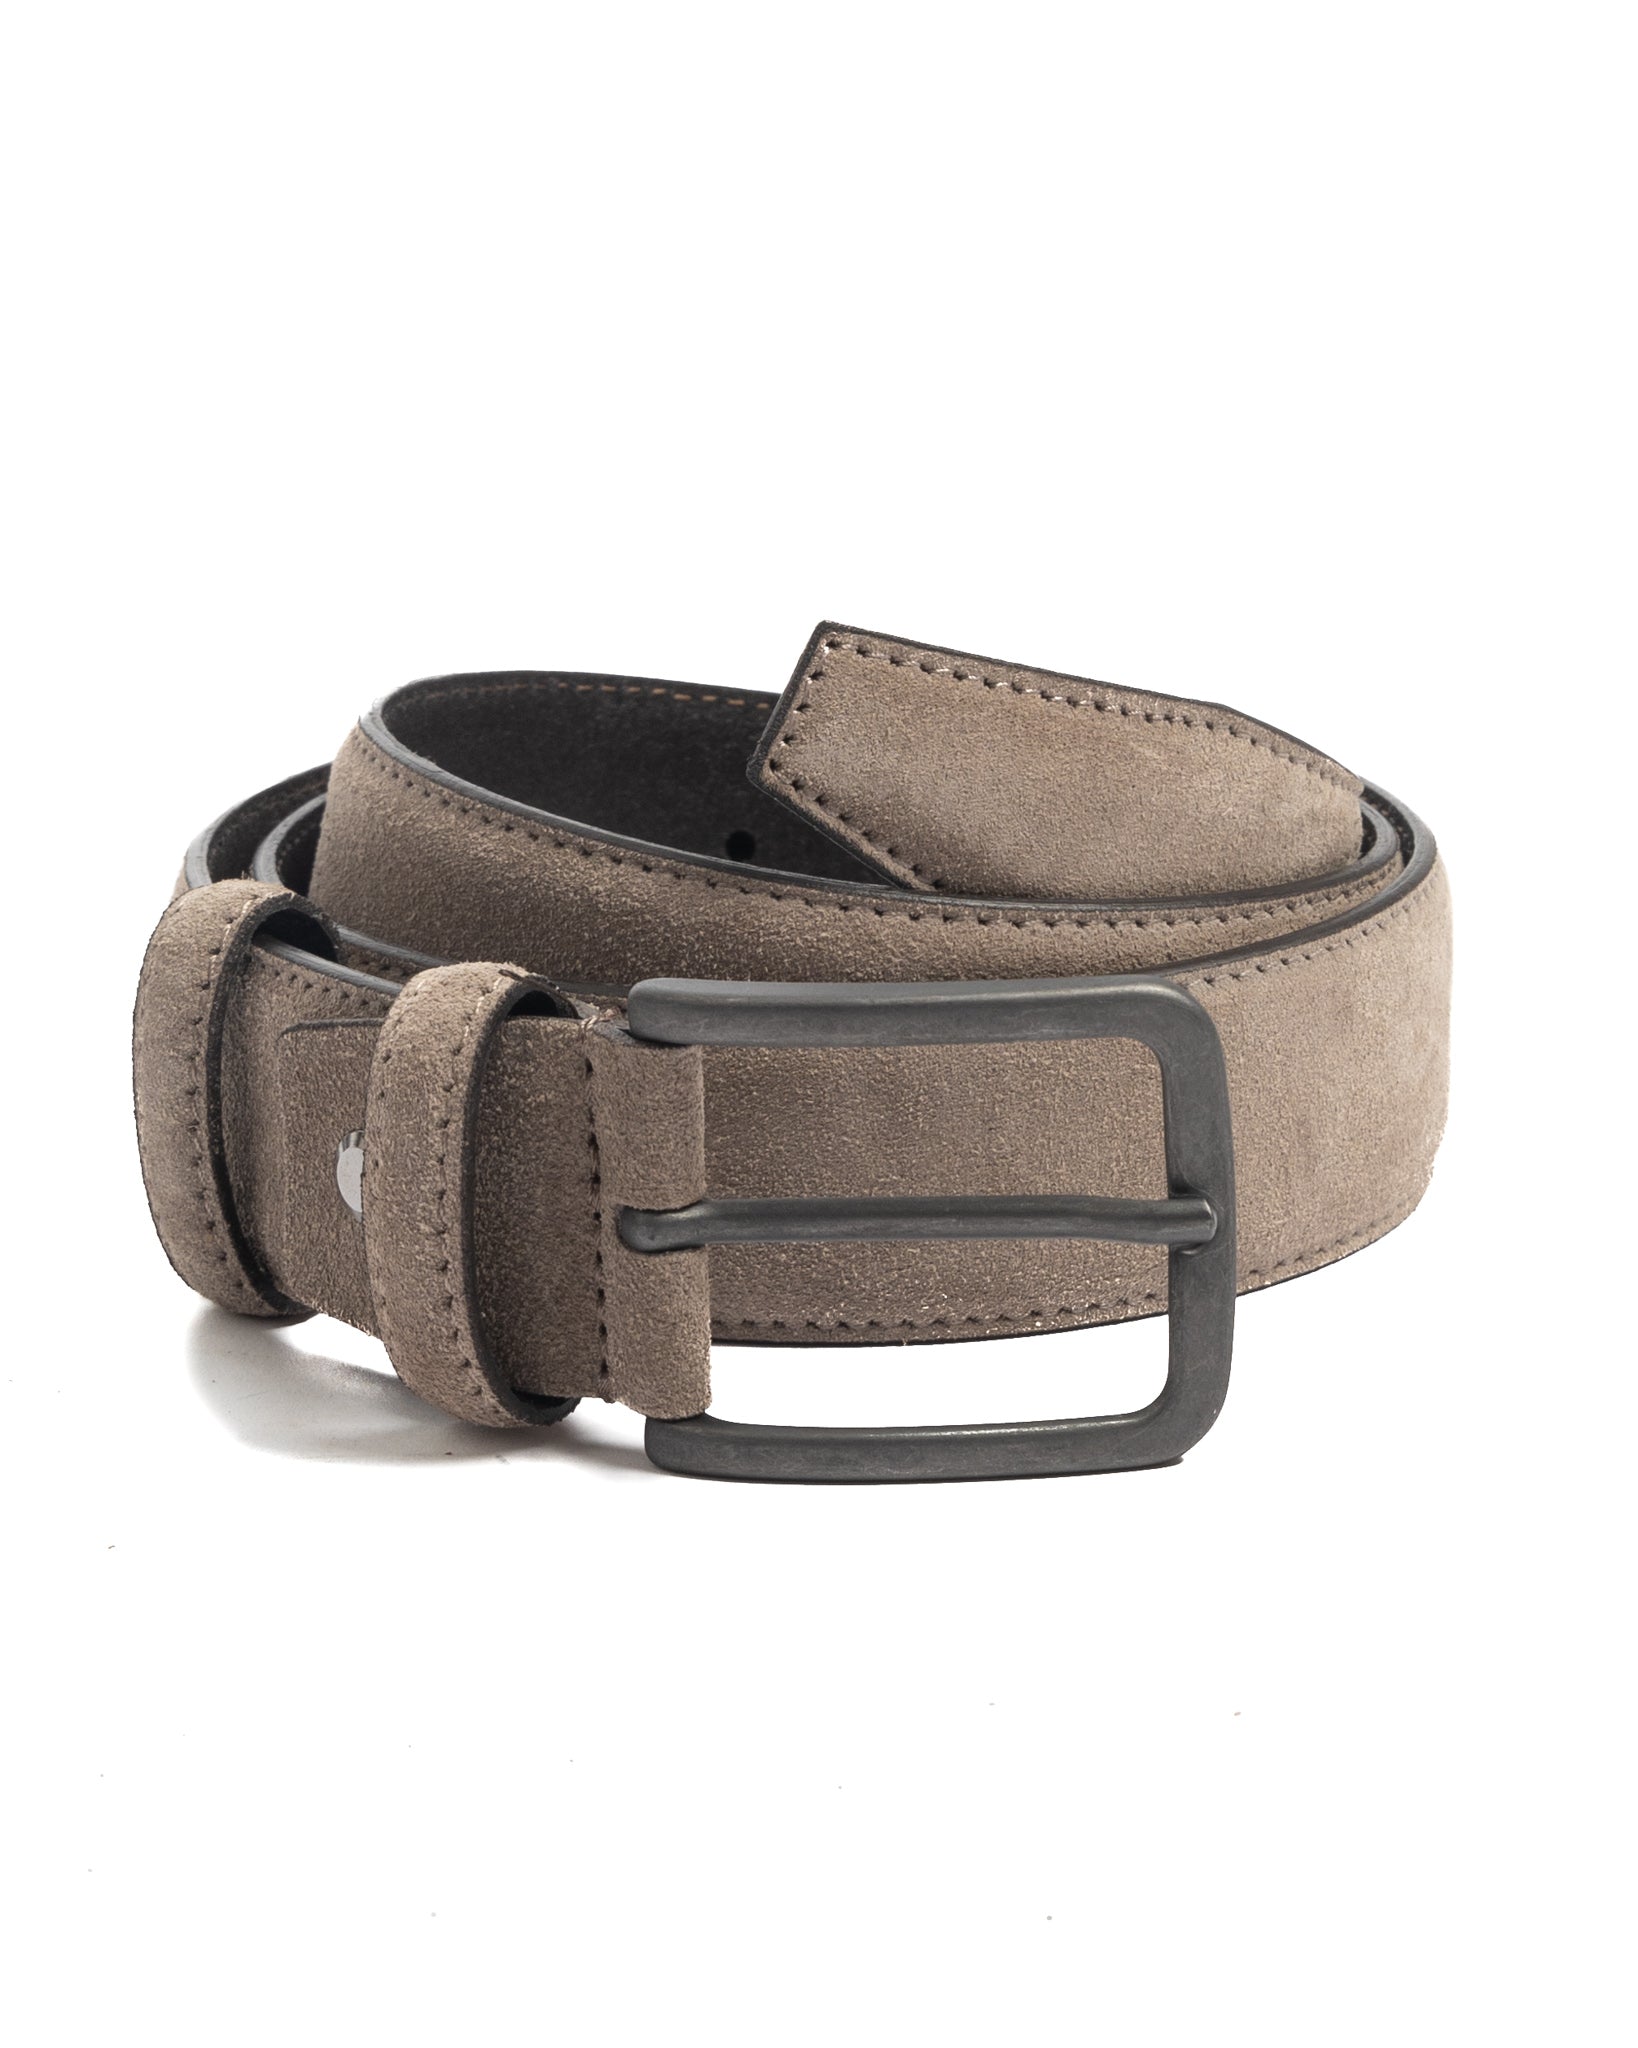 Cortona - ceinture en daim gris tourterelle